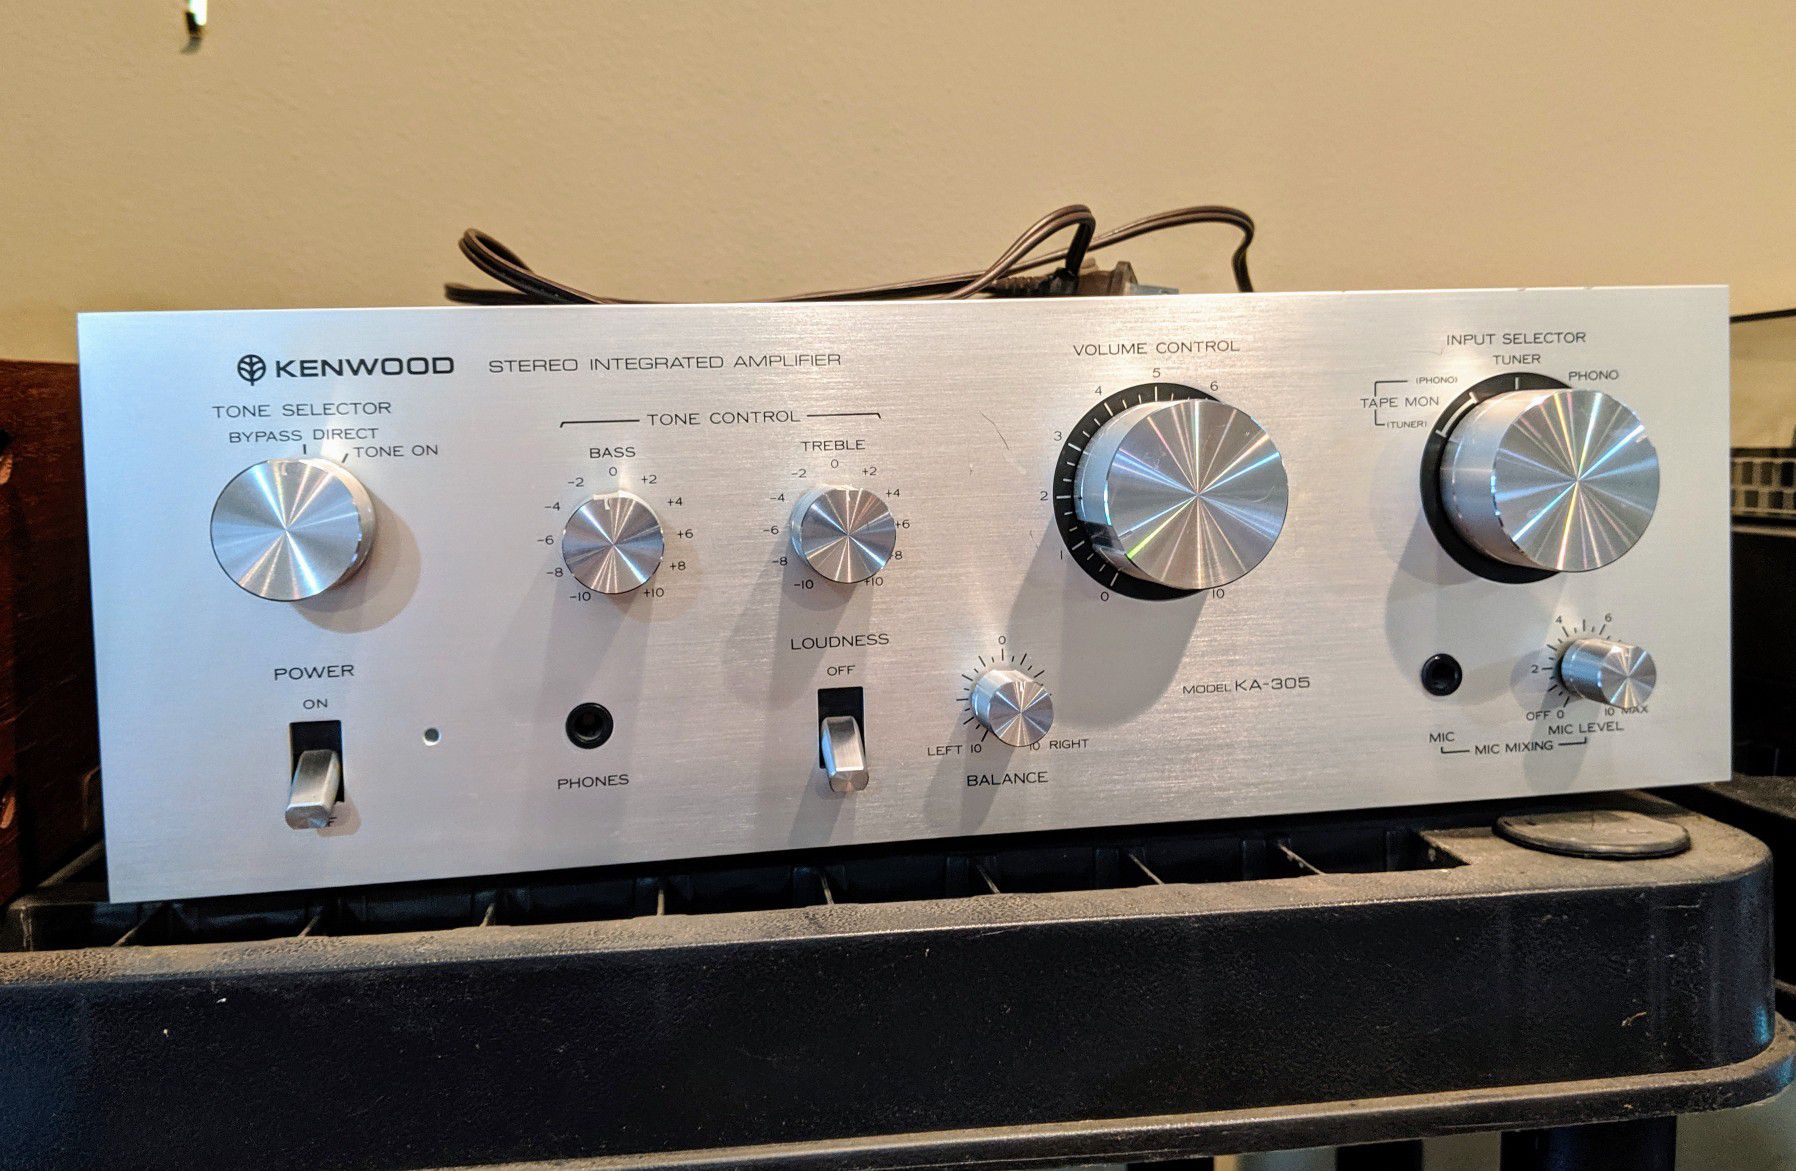 Nice Kenwood KA-305 integrated amp, amplifier